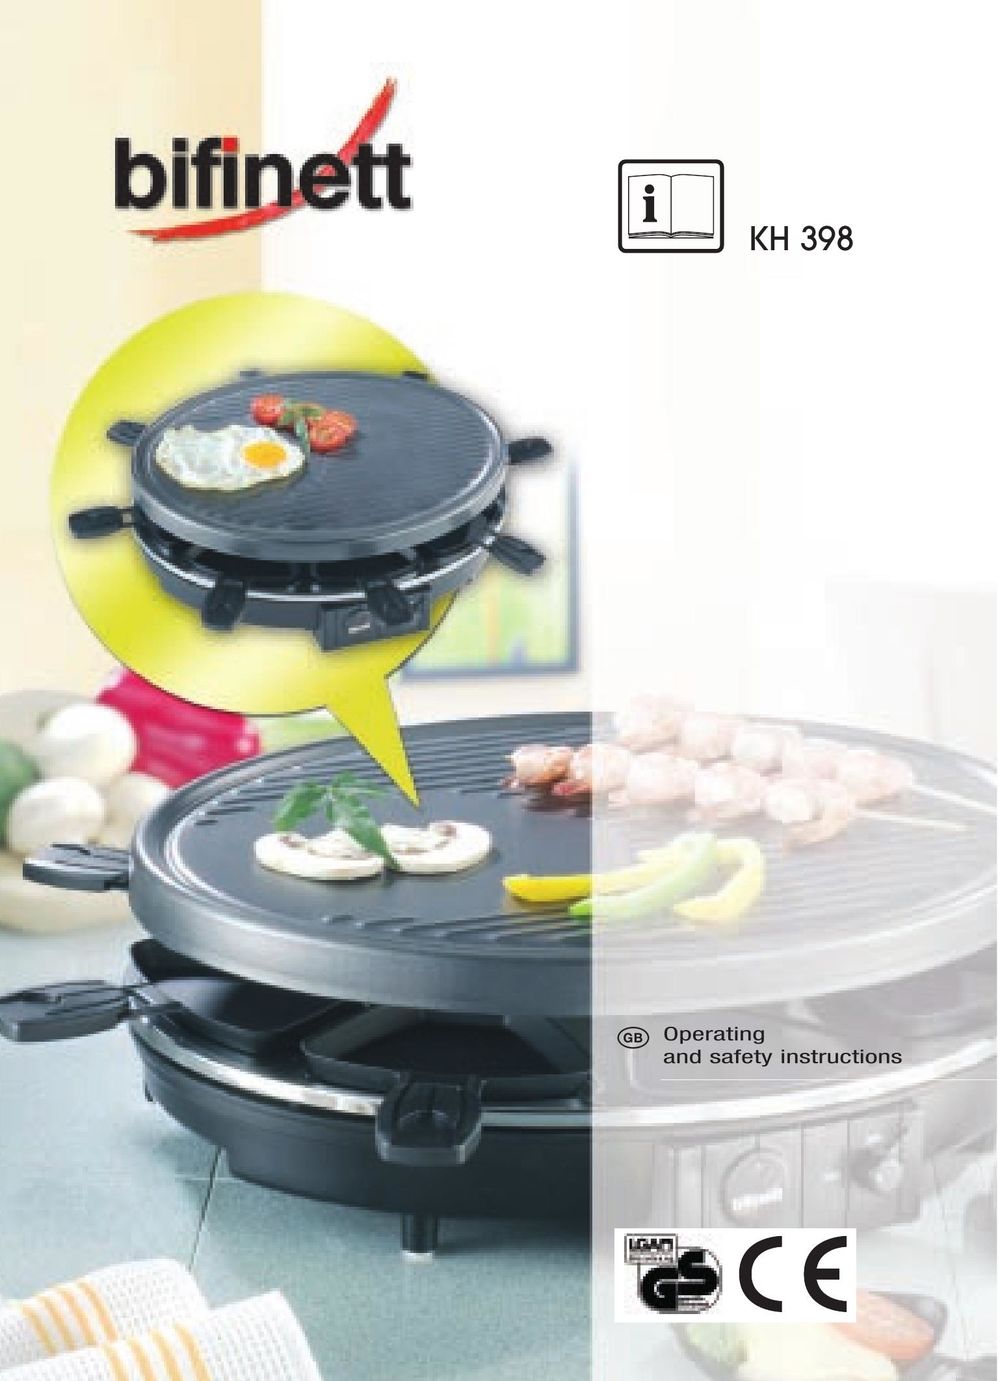 Bifinett KH 398 Kitchen Grill User Manual